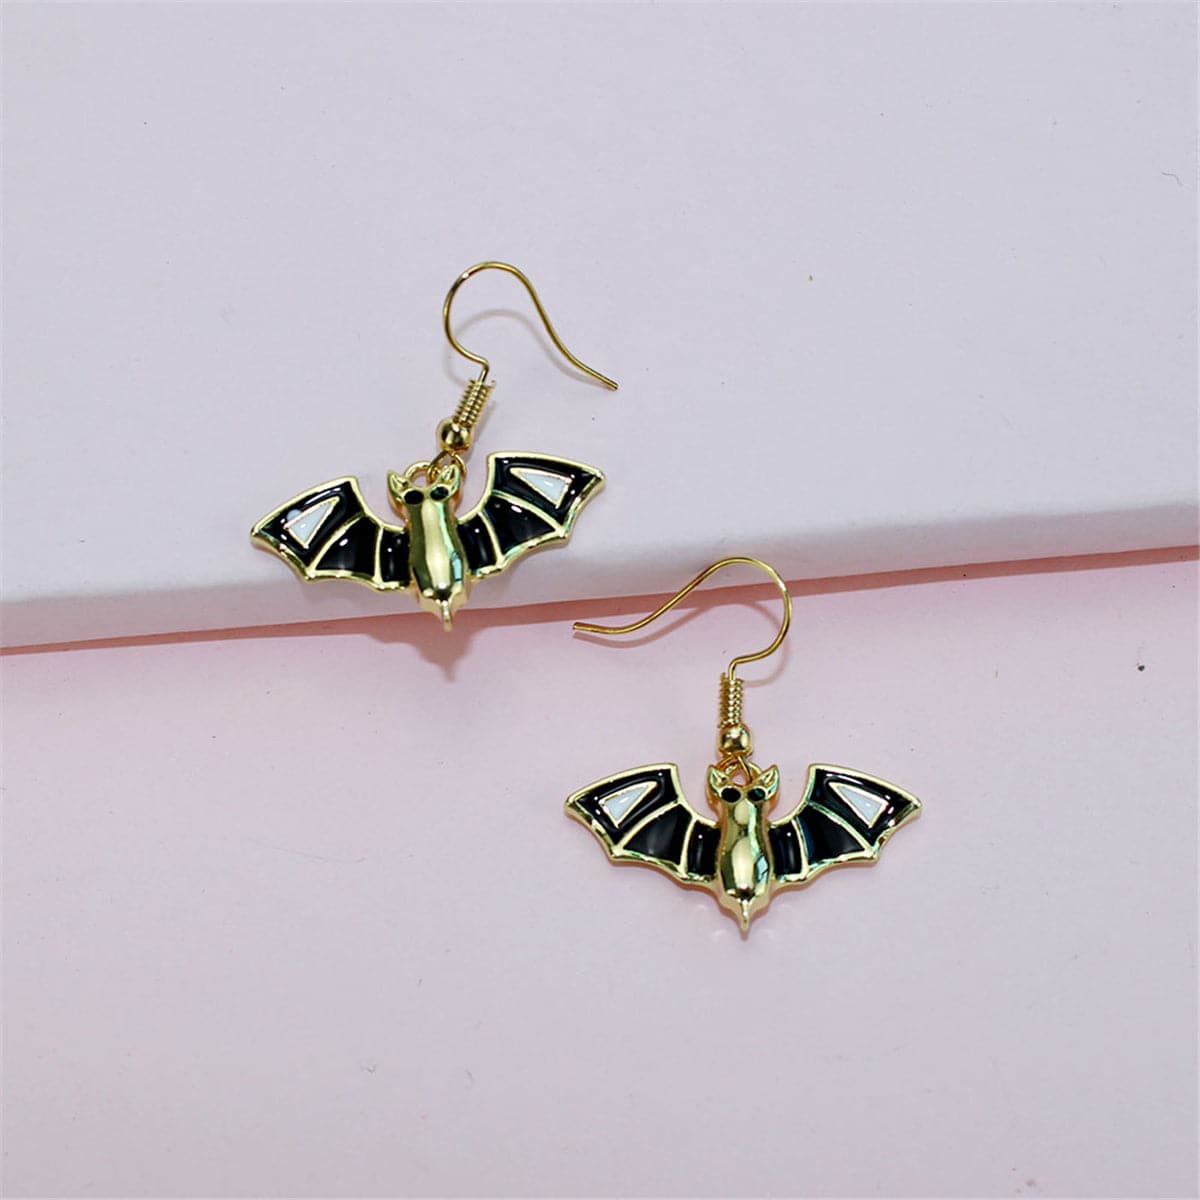 Black & 18K Gold-Plated Bat Pendant Necklace & Drop Earrings